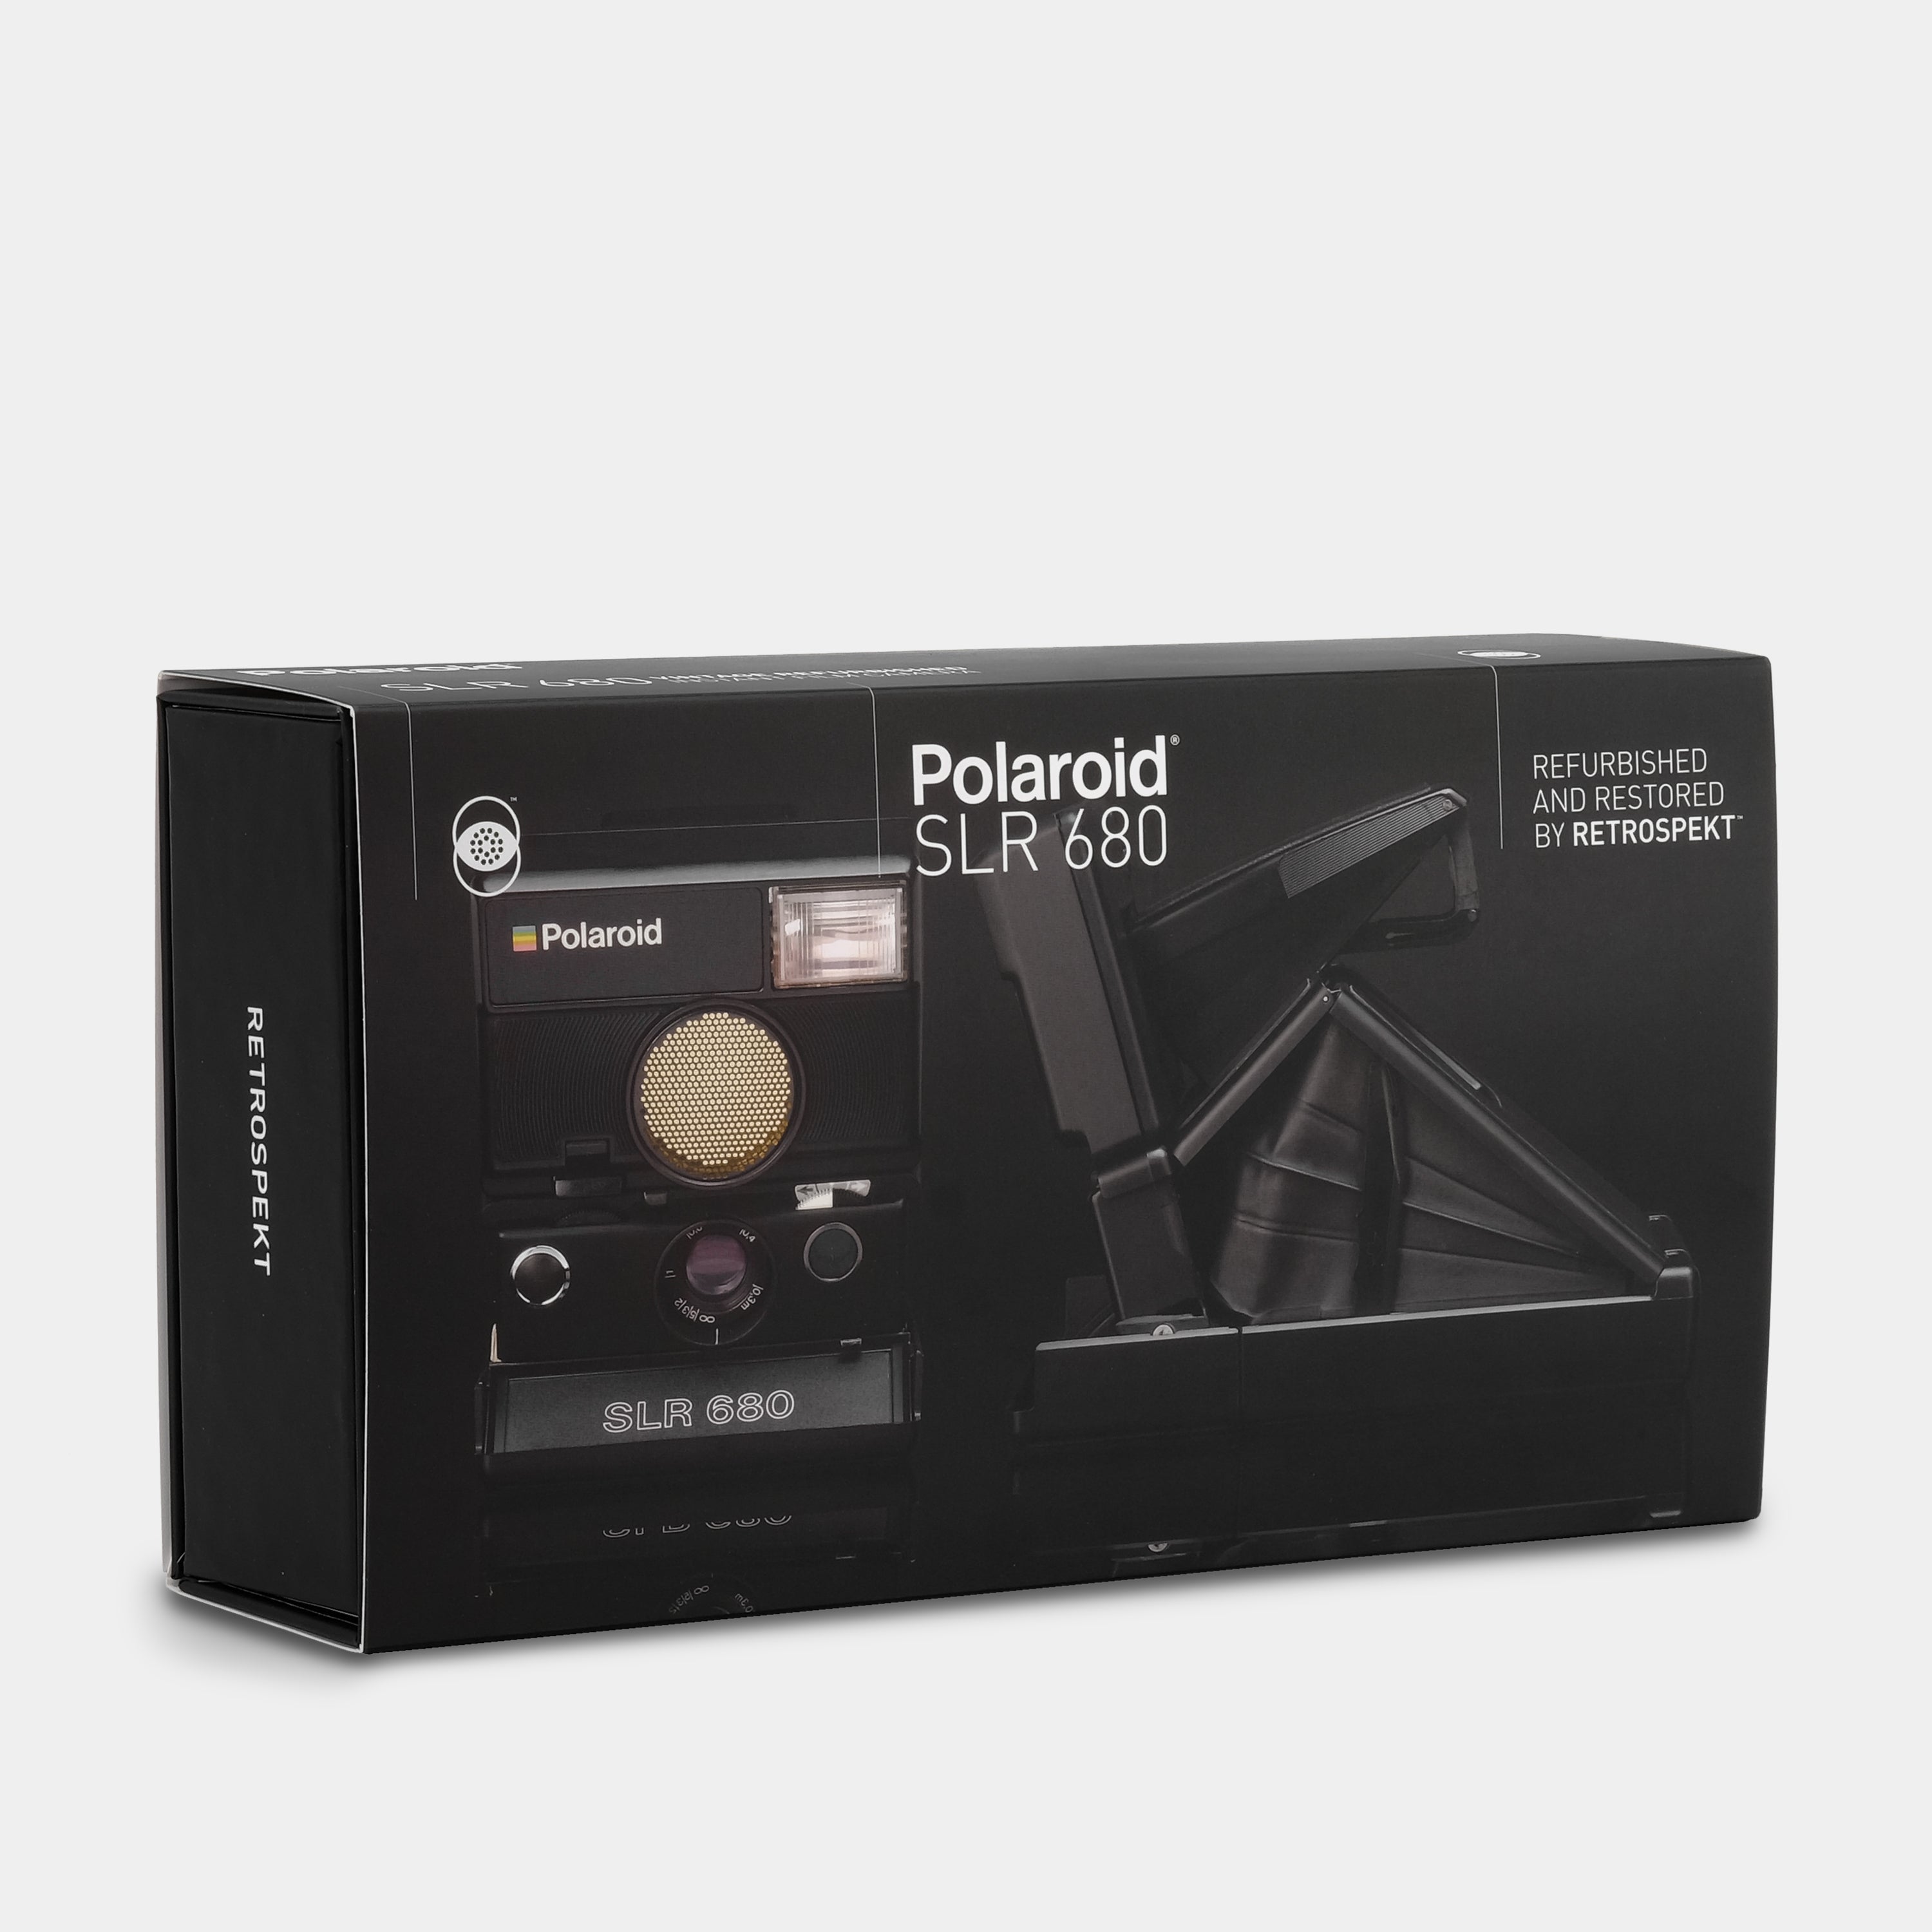 Polaroid 600 SLR 680 Folding Instant Film Camera